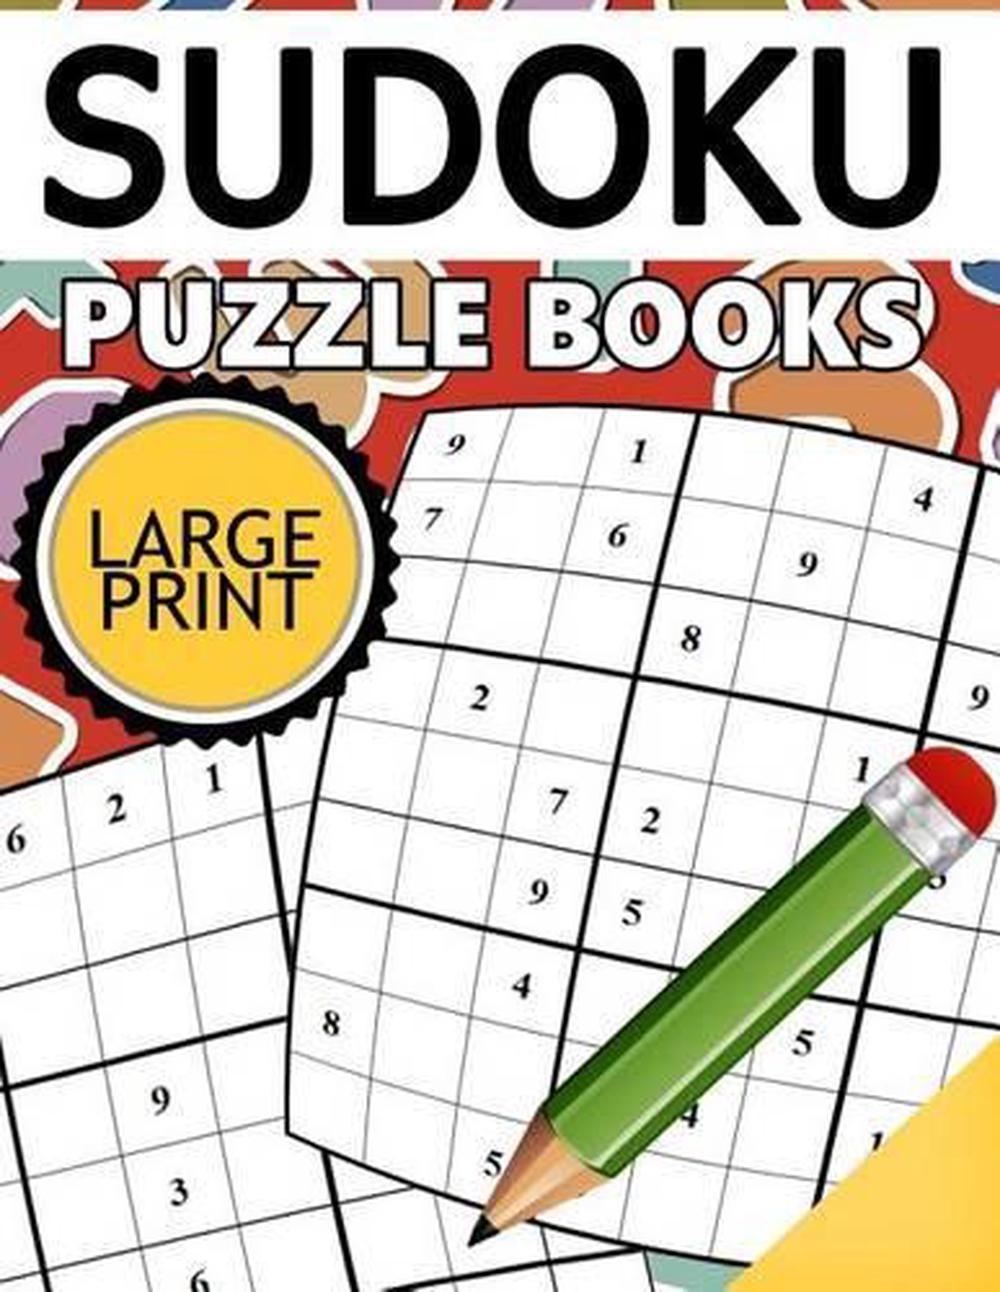 sudoku puzzle books large print easy medium to hard level puzzles for